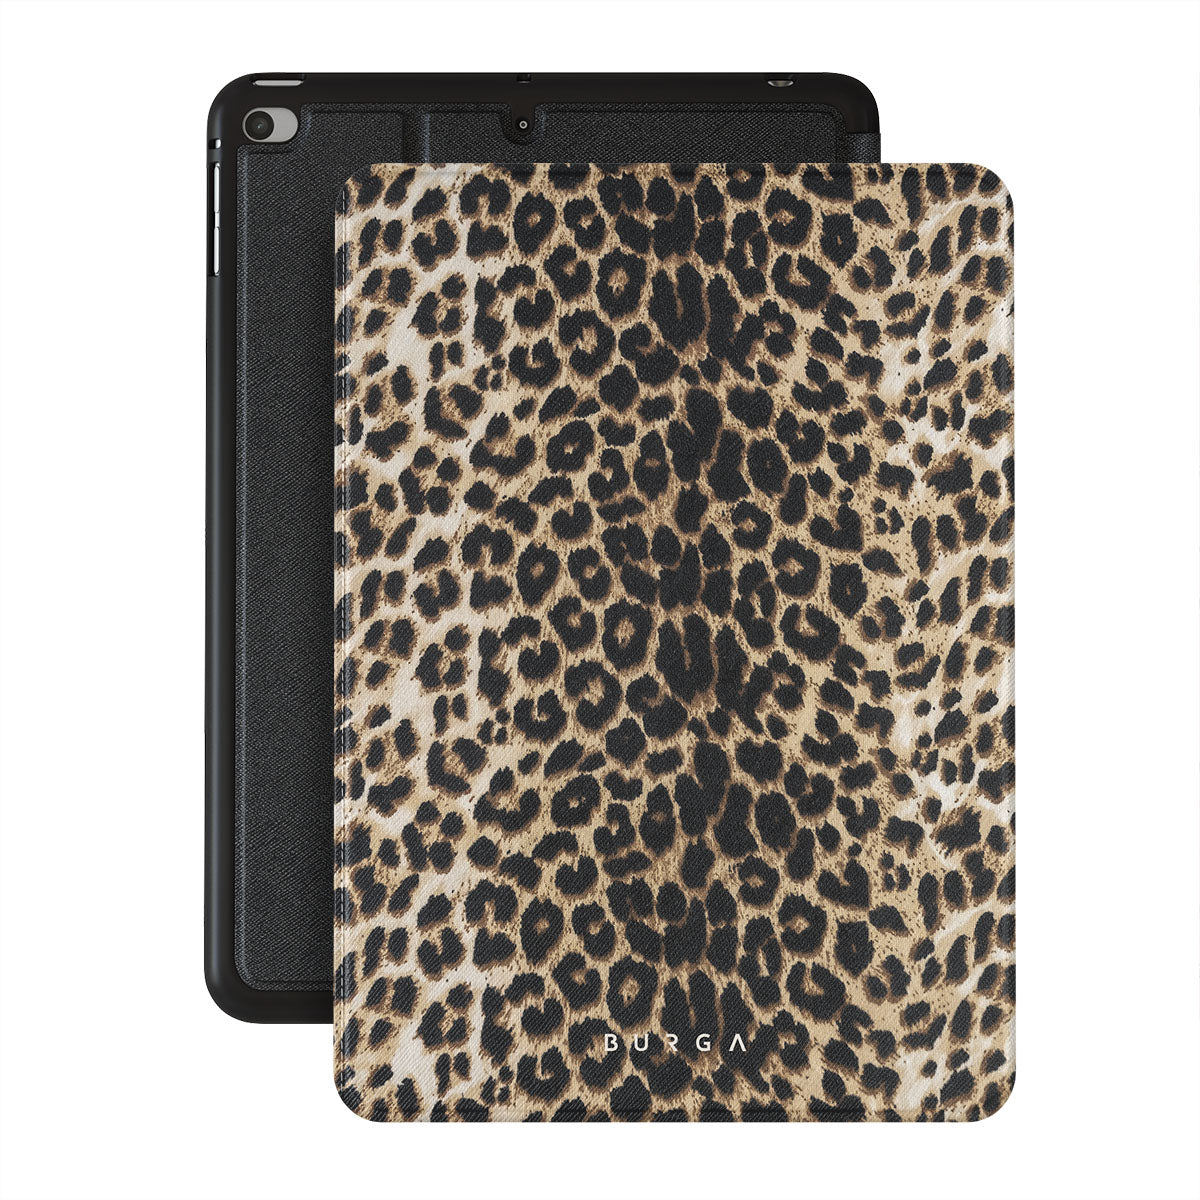 Player - iPad Mini 7.9 (5th Gen) Case | BURGA